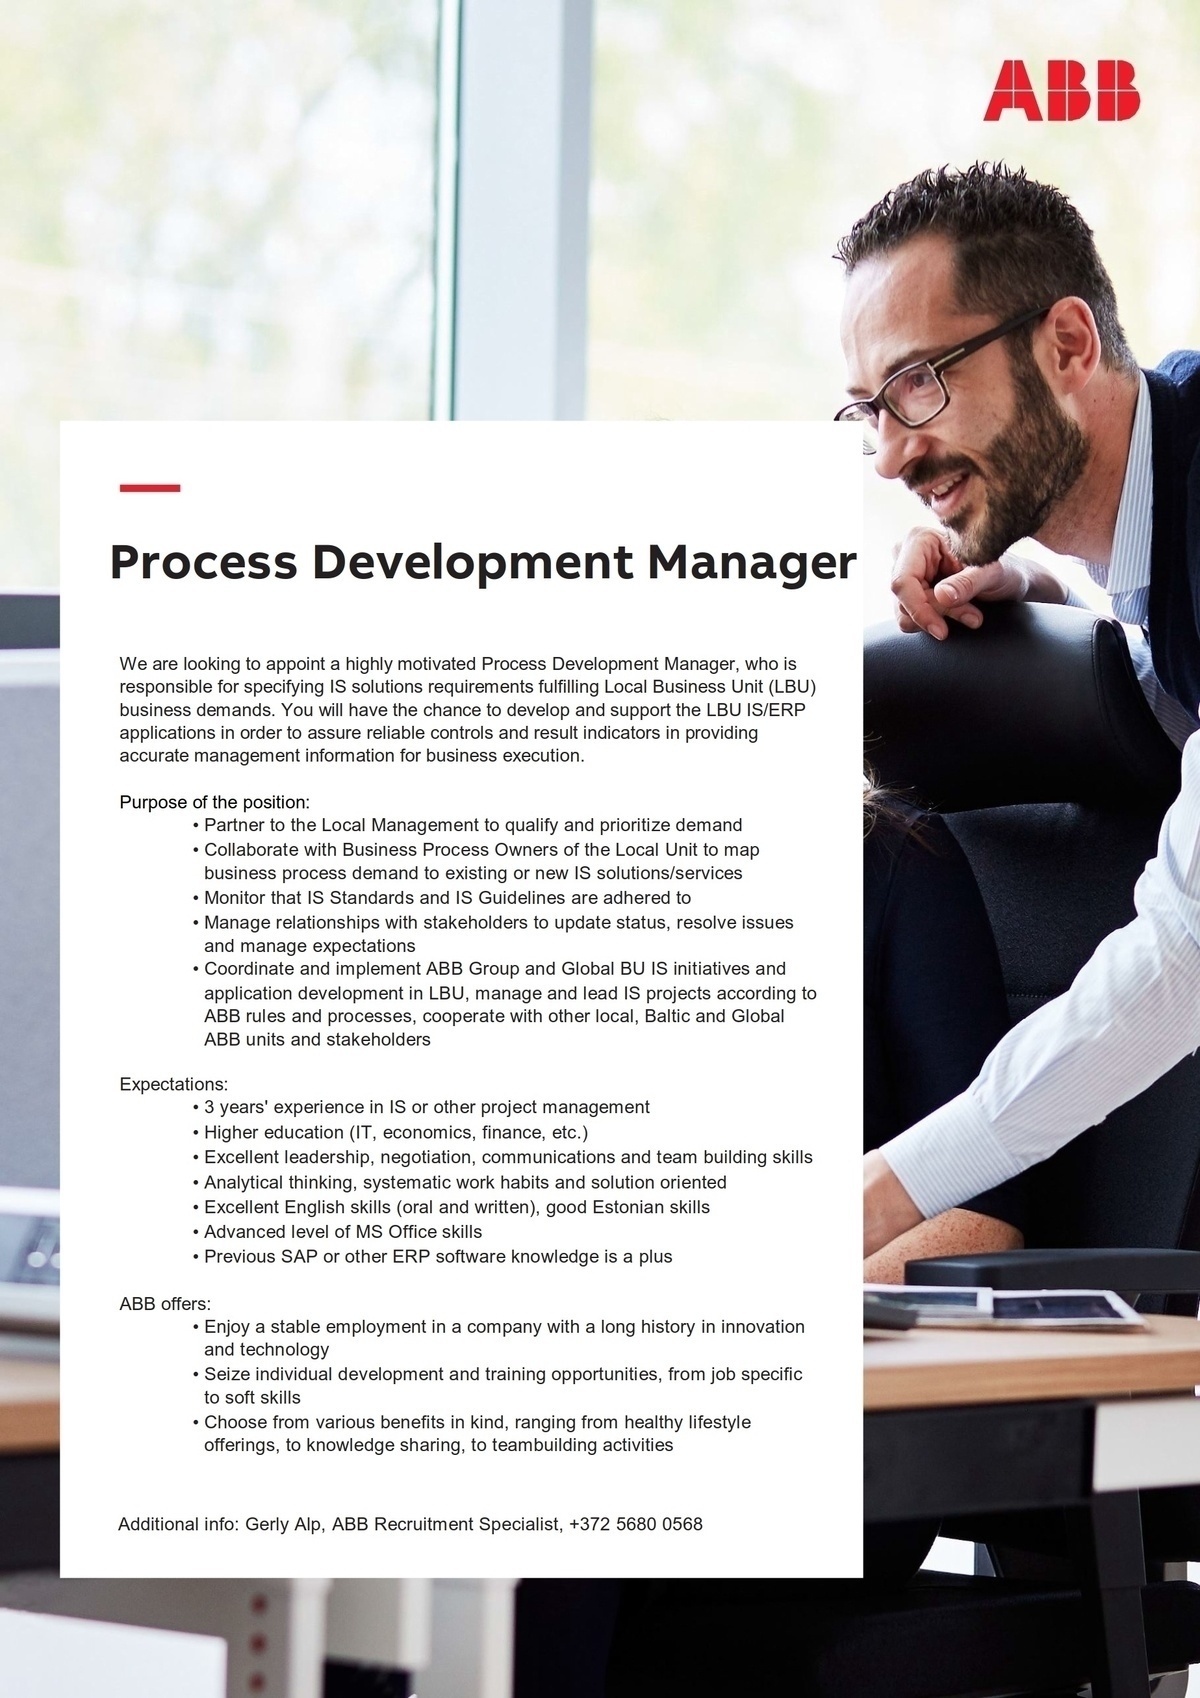 ABB AS Process Development Manager